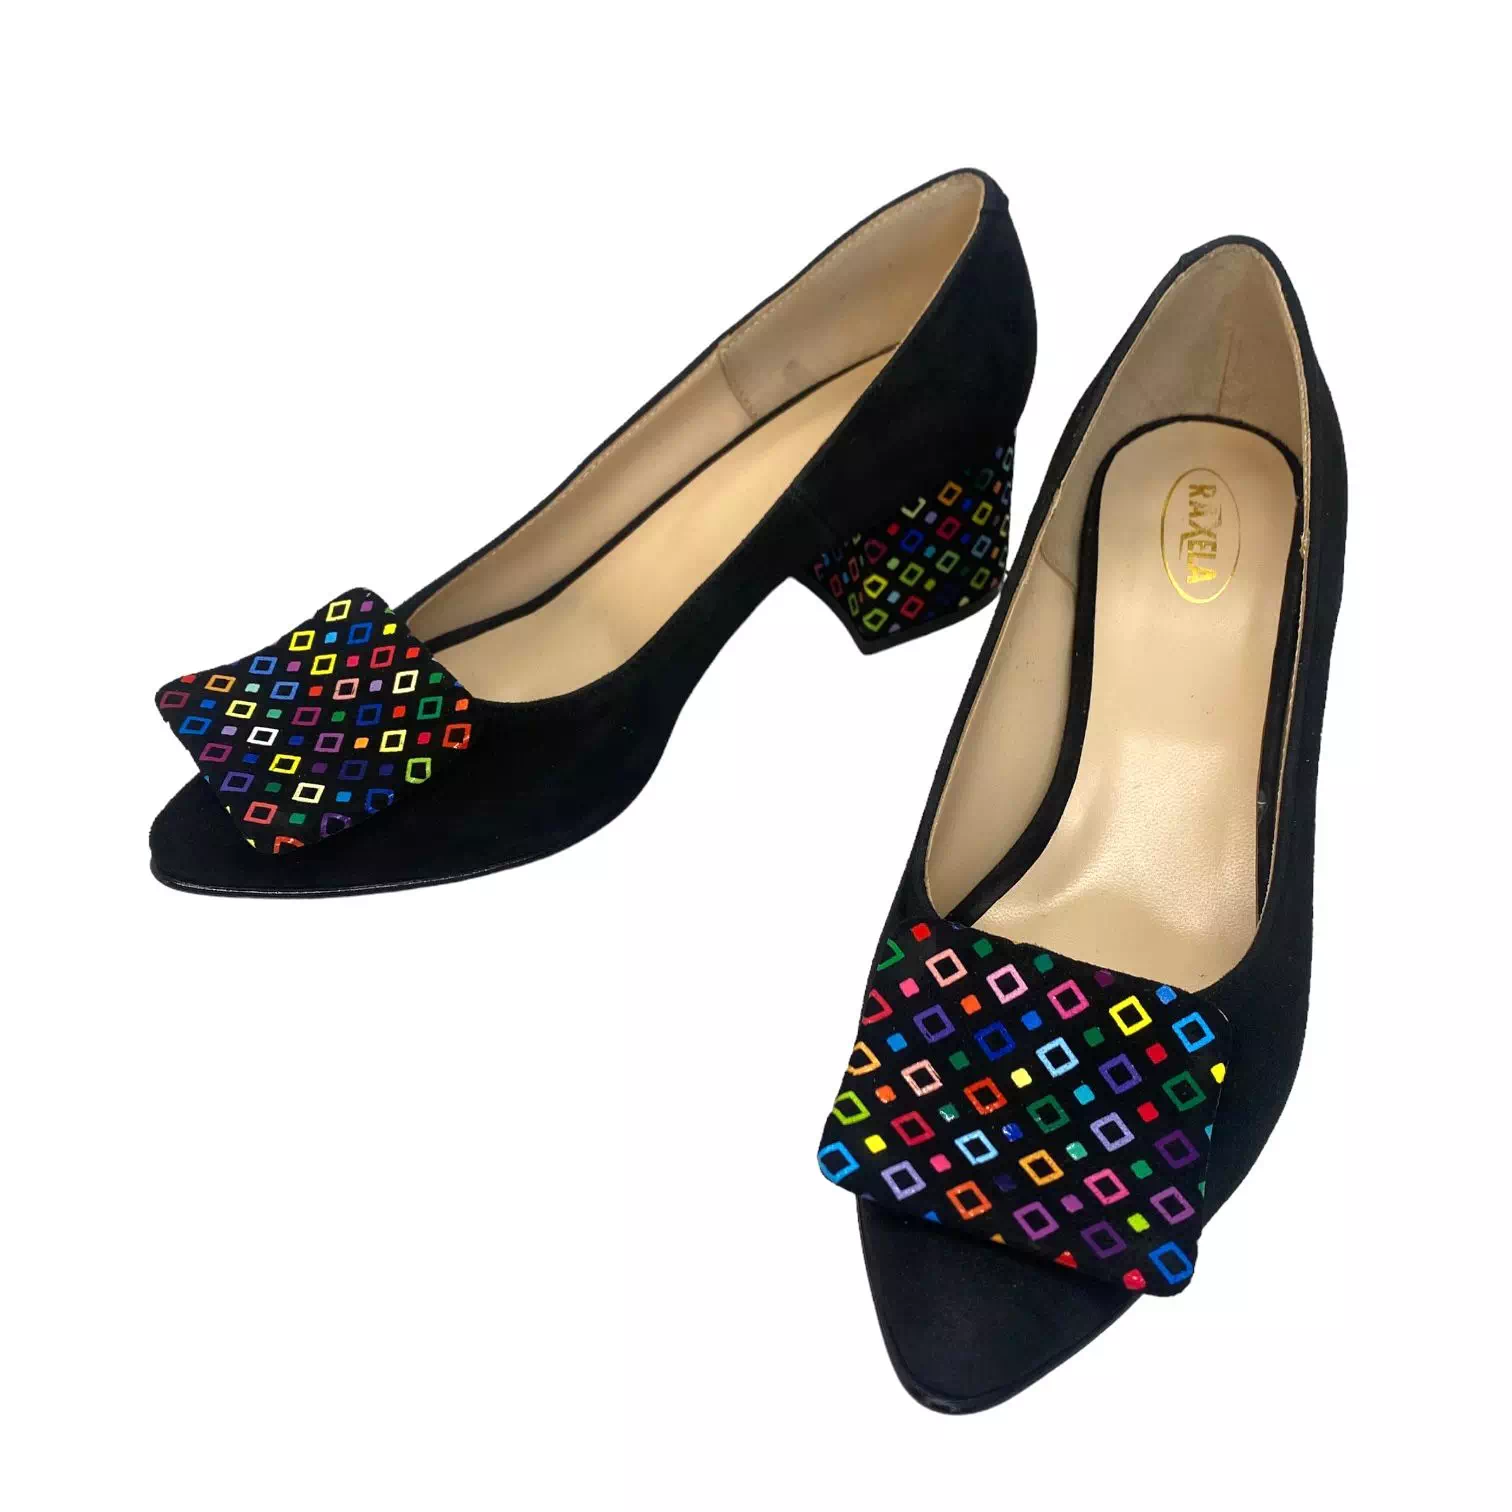 Pantofi Raxela negri cu accesoriu si detalii multicolore